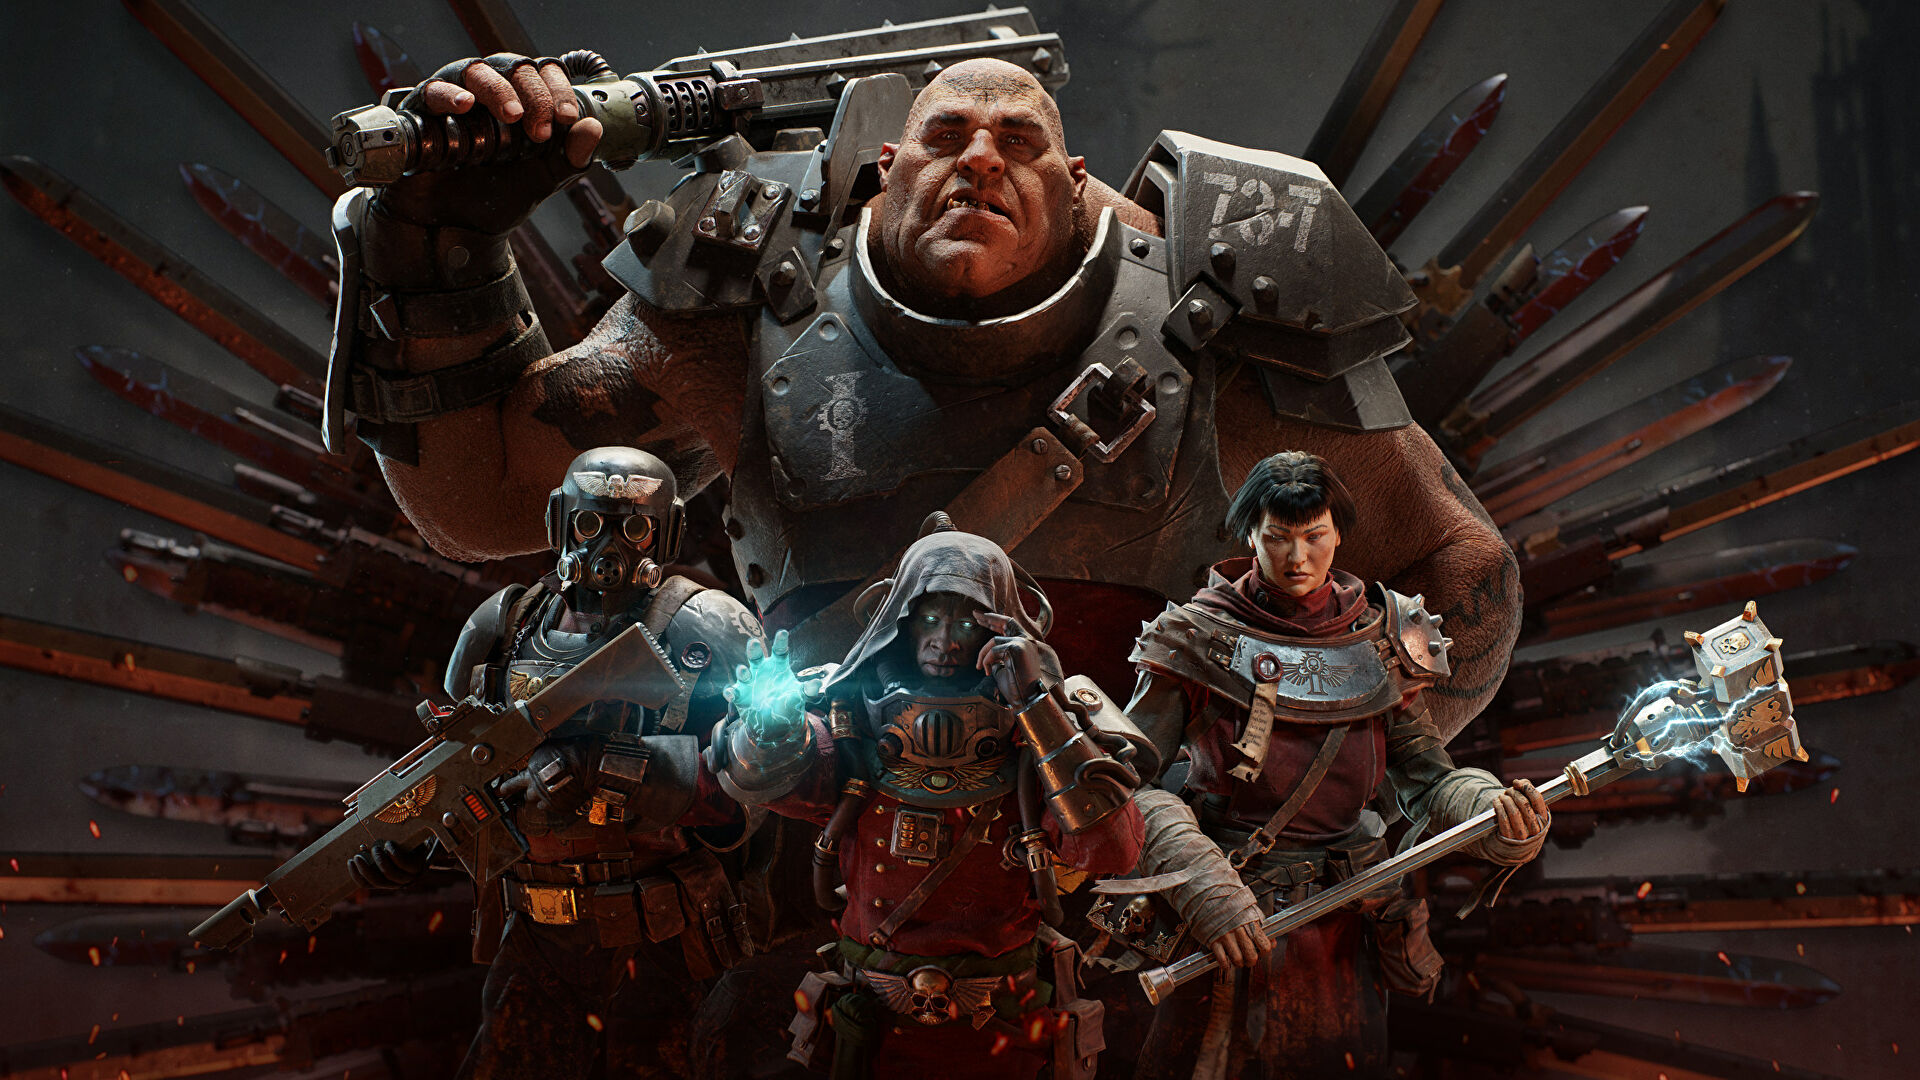 Warhammer 40K: Darktide’s closed beta will take place in October